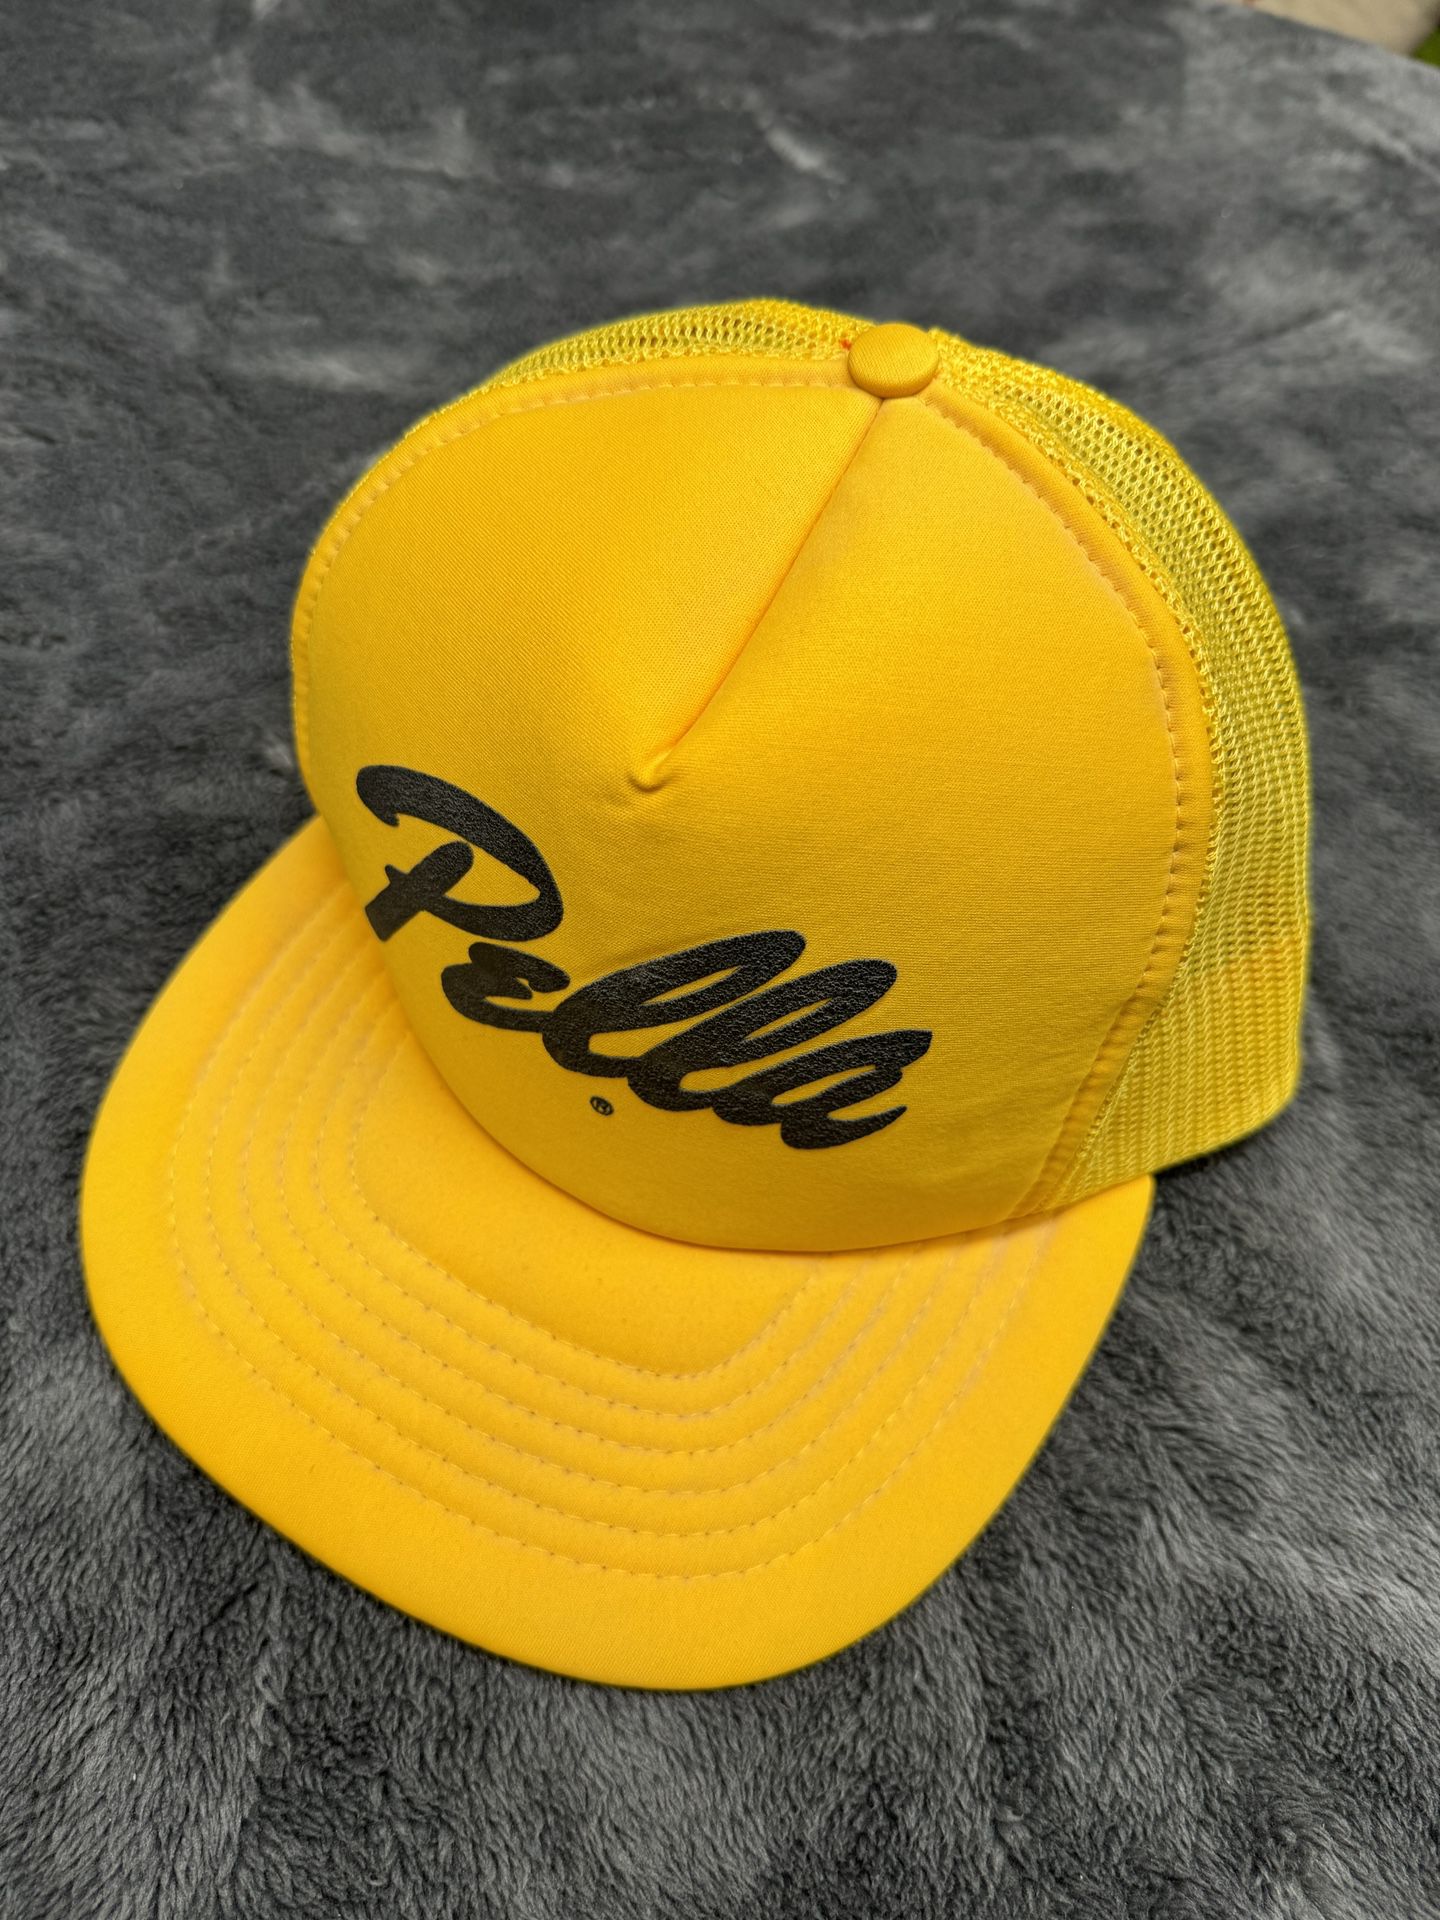 Vintage Pella Windows Adjustable Truckers Hat In Great Shape!  